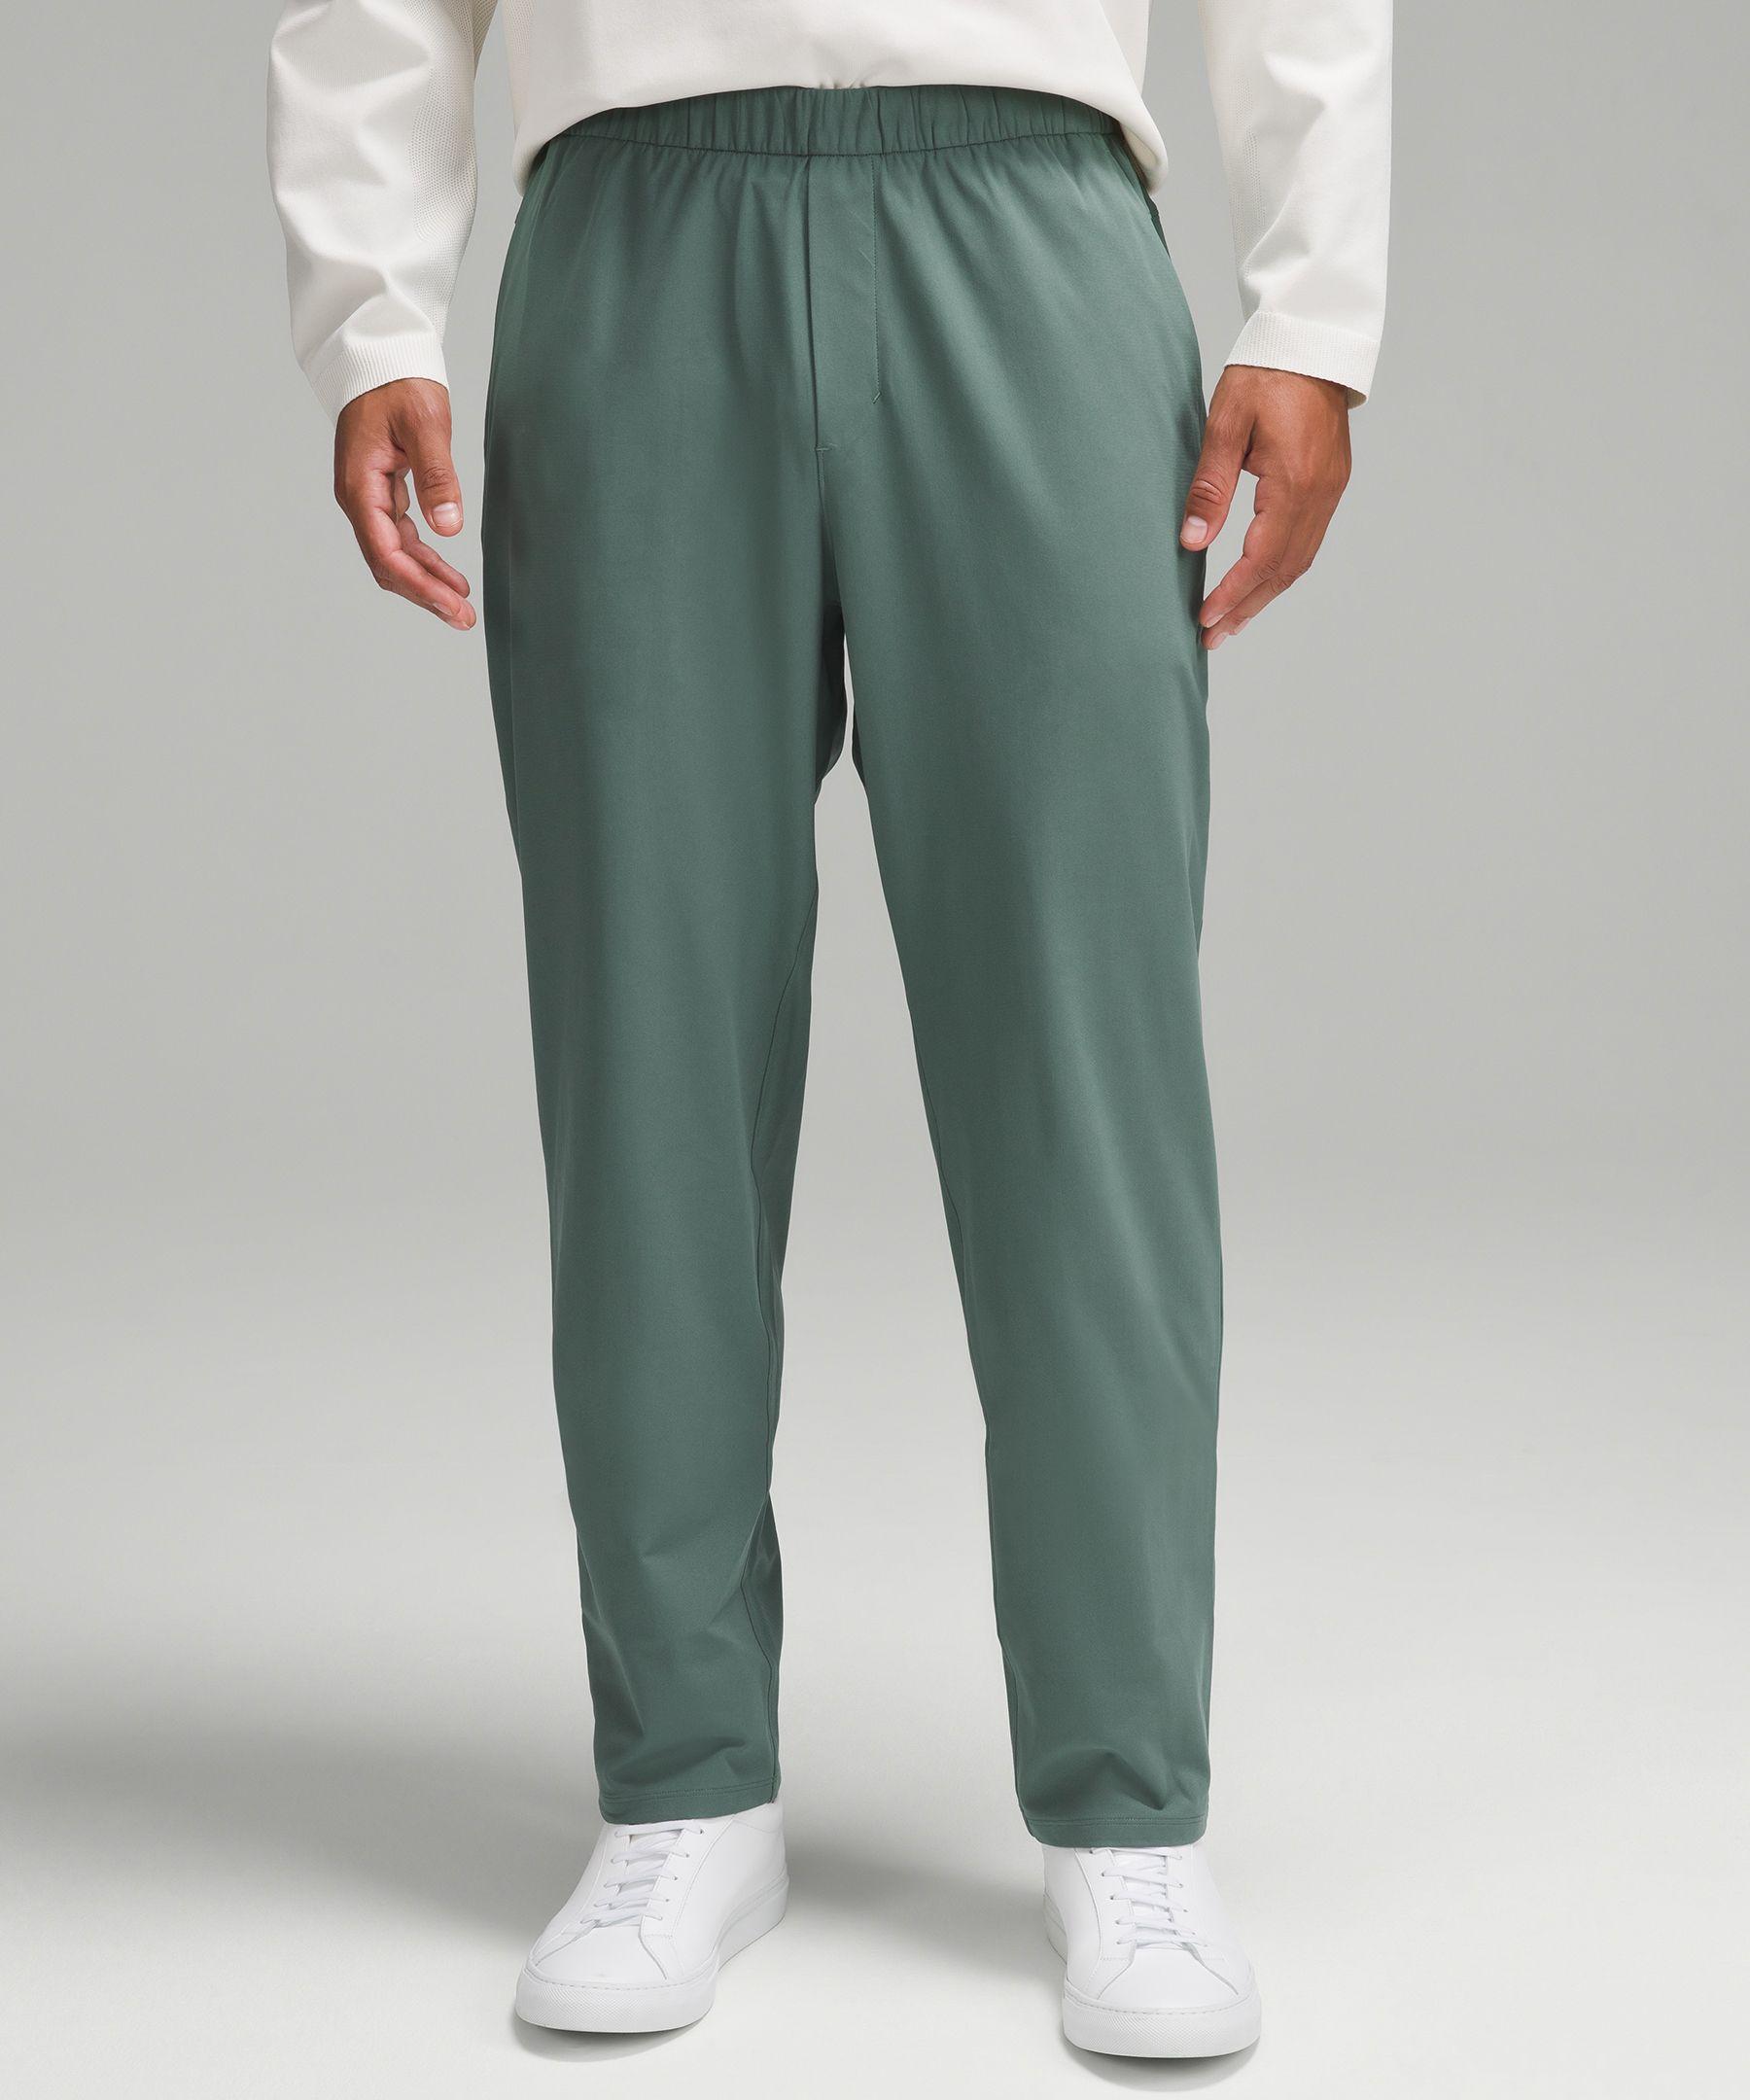 lululemon athletica Abc Warpstreme Pull-on Pants Regular in Green for Men